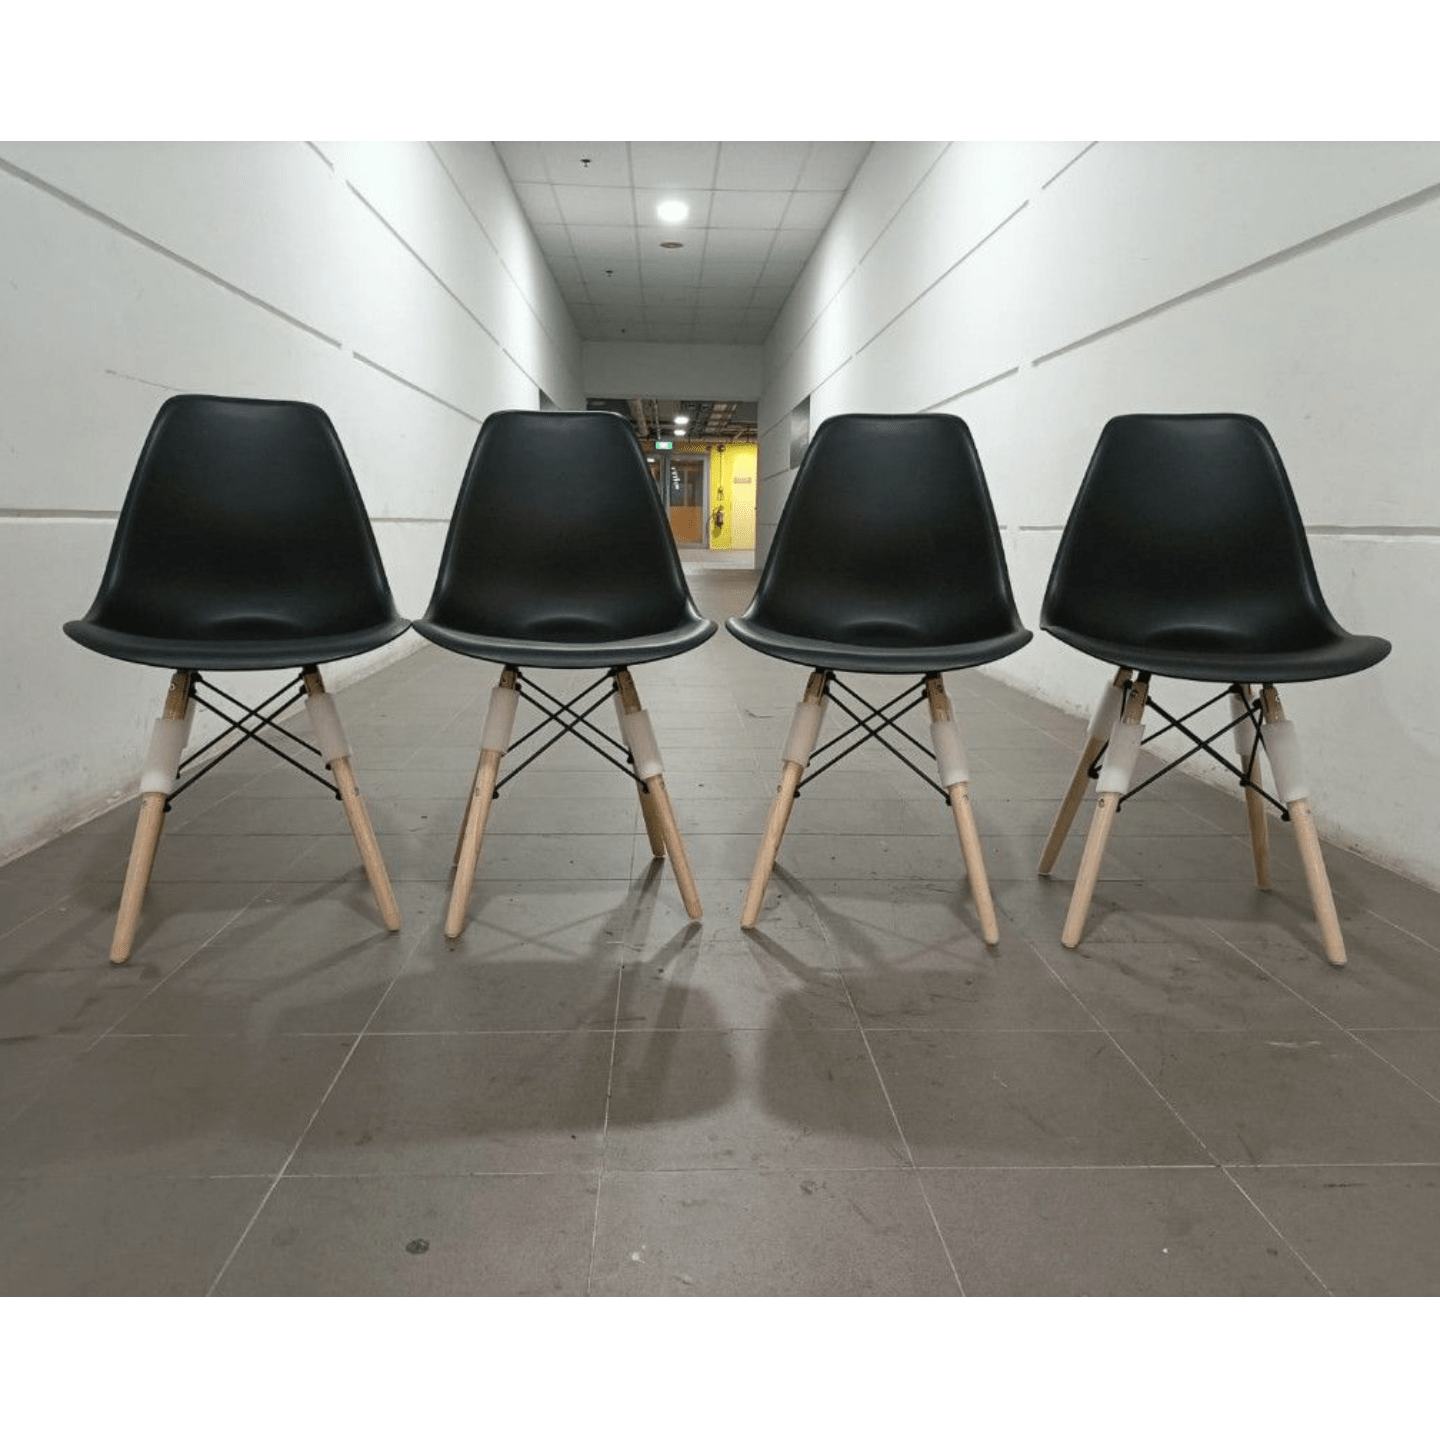 4 x RAZ V2 Dining Chairs in BLACK